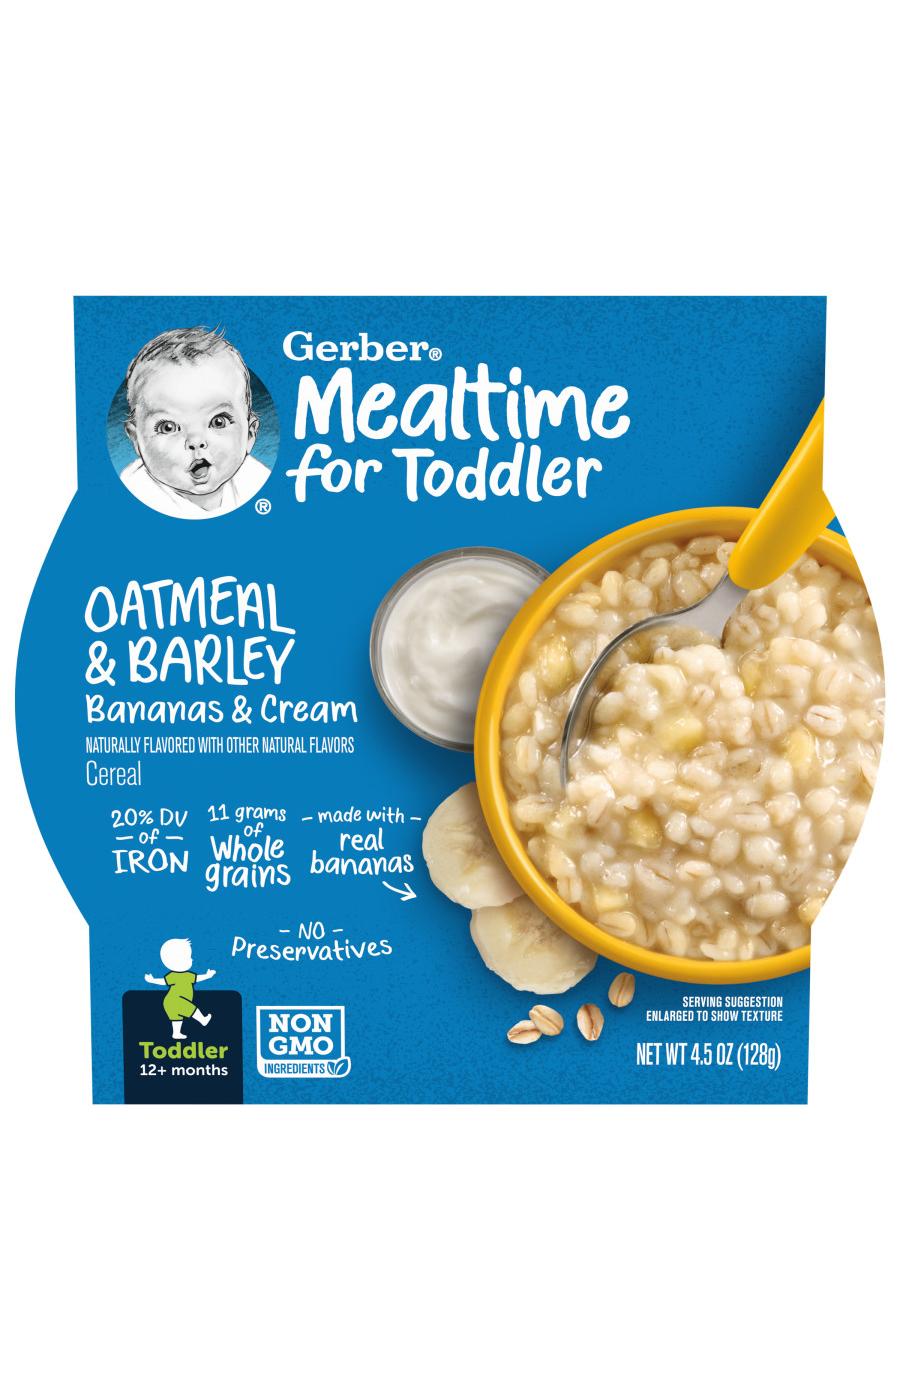 Gerber Mealtime for Toddler Oatmeal & Barley - Bananas & Cream; image 1 of 8